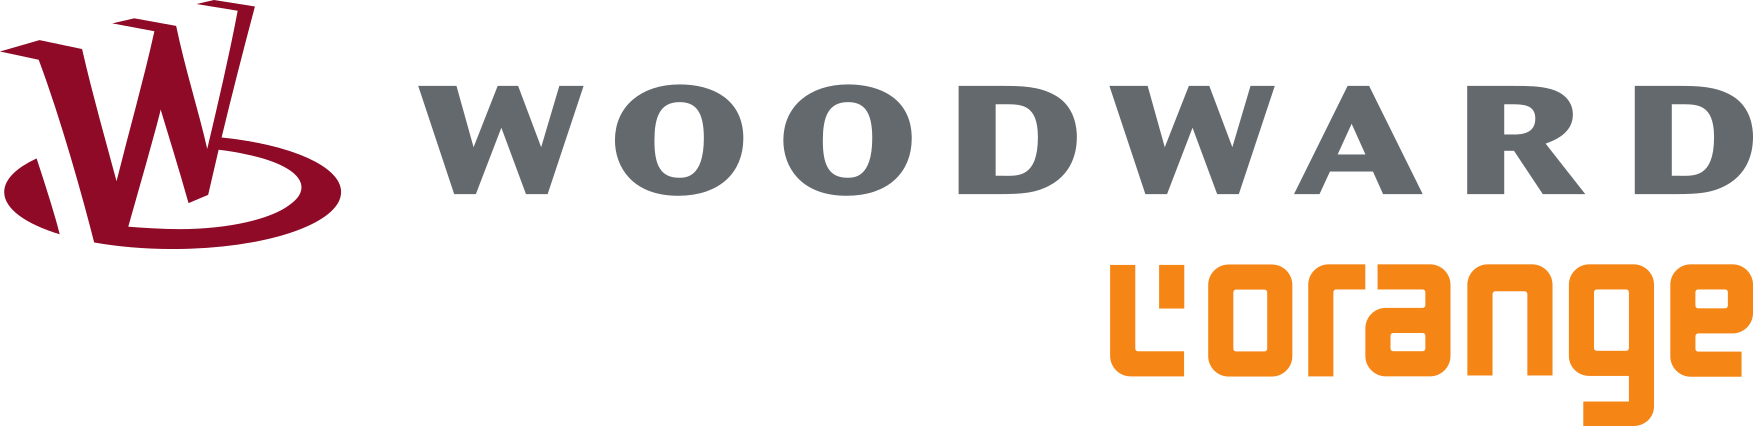 Woodward L'Orange logo